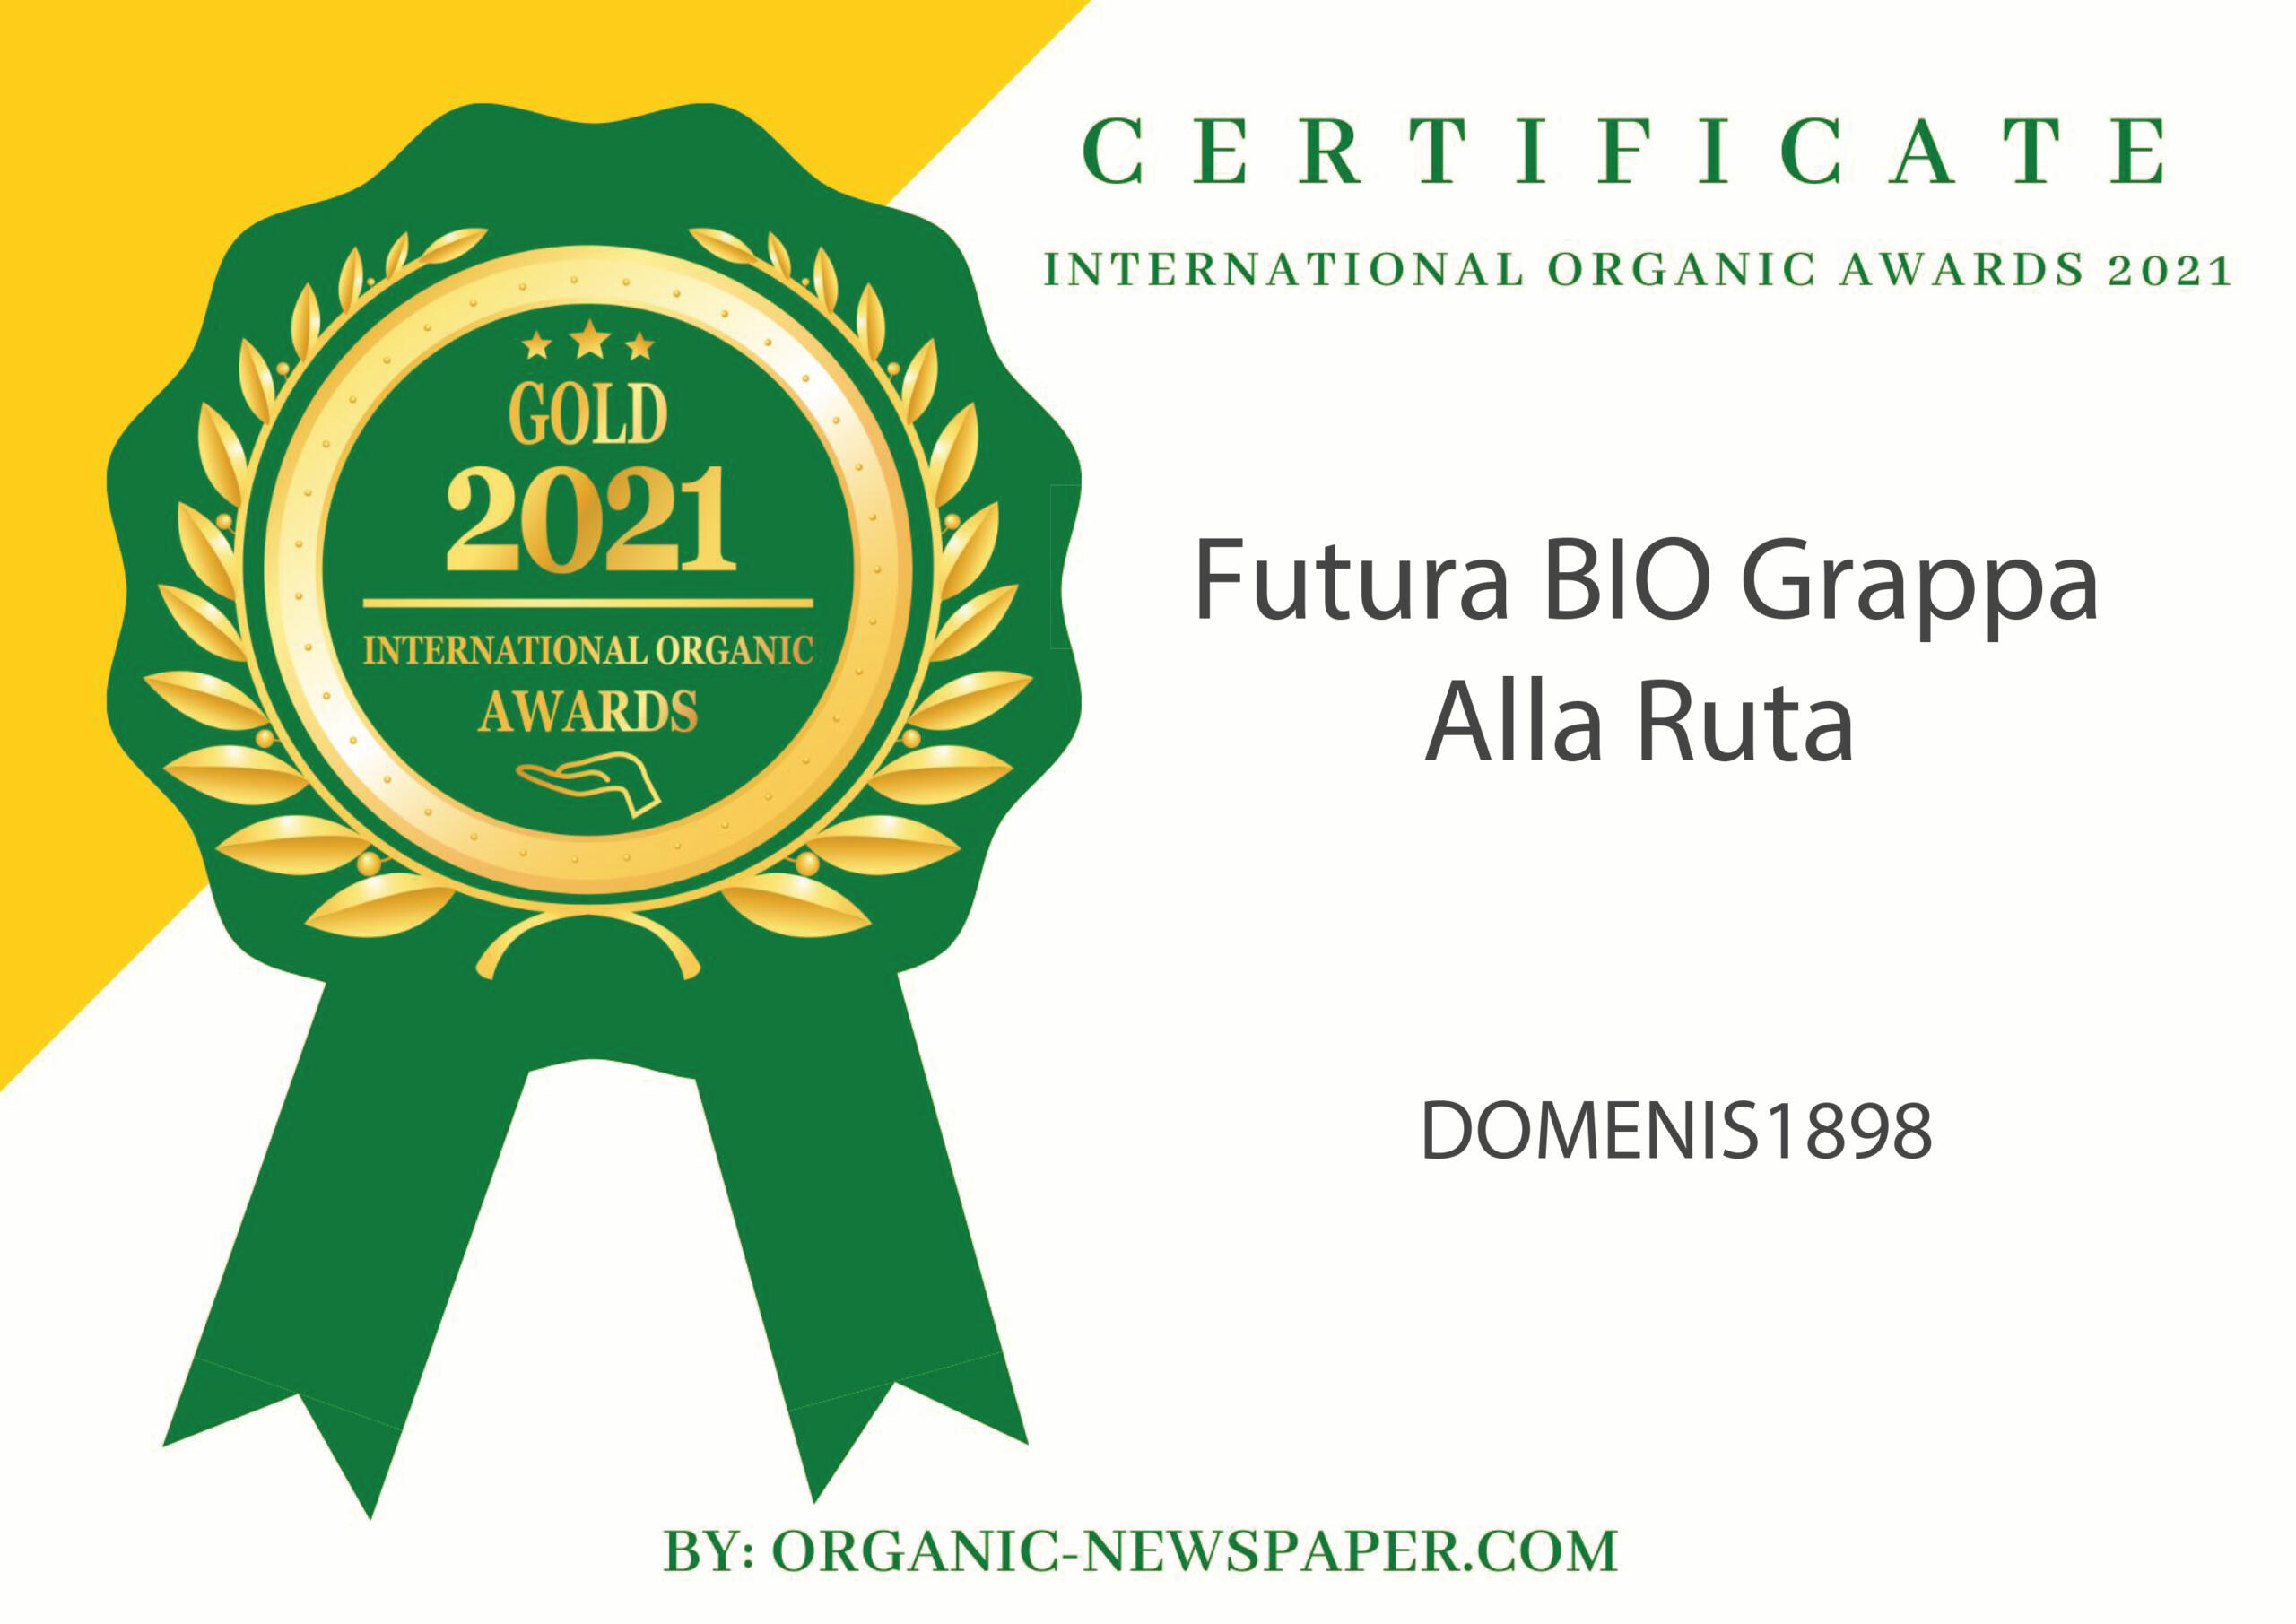 International Organic Awards 2021 – Gold Winner – Futura BIO Grappa Alla Ruta